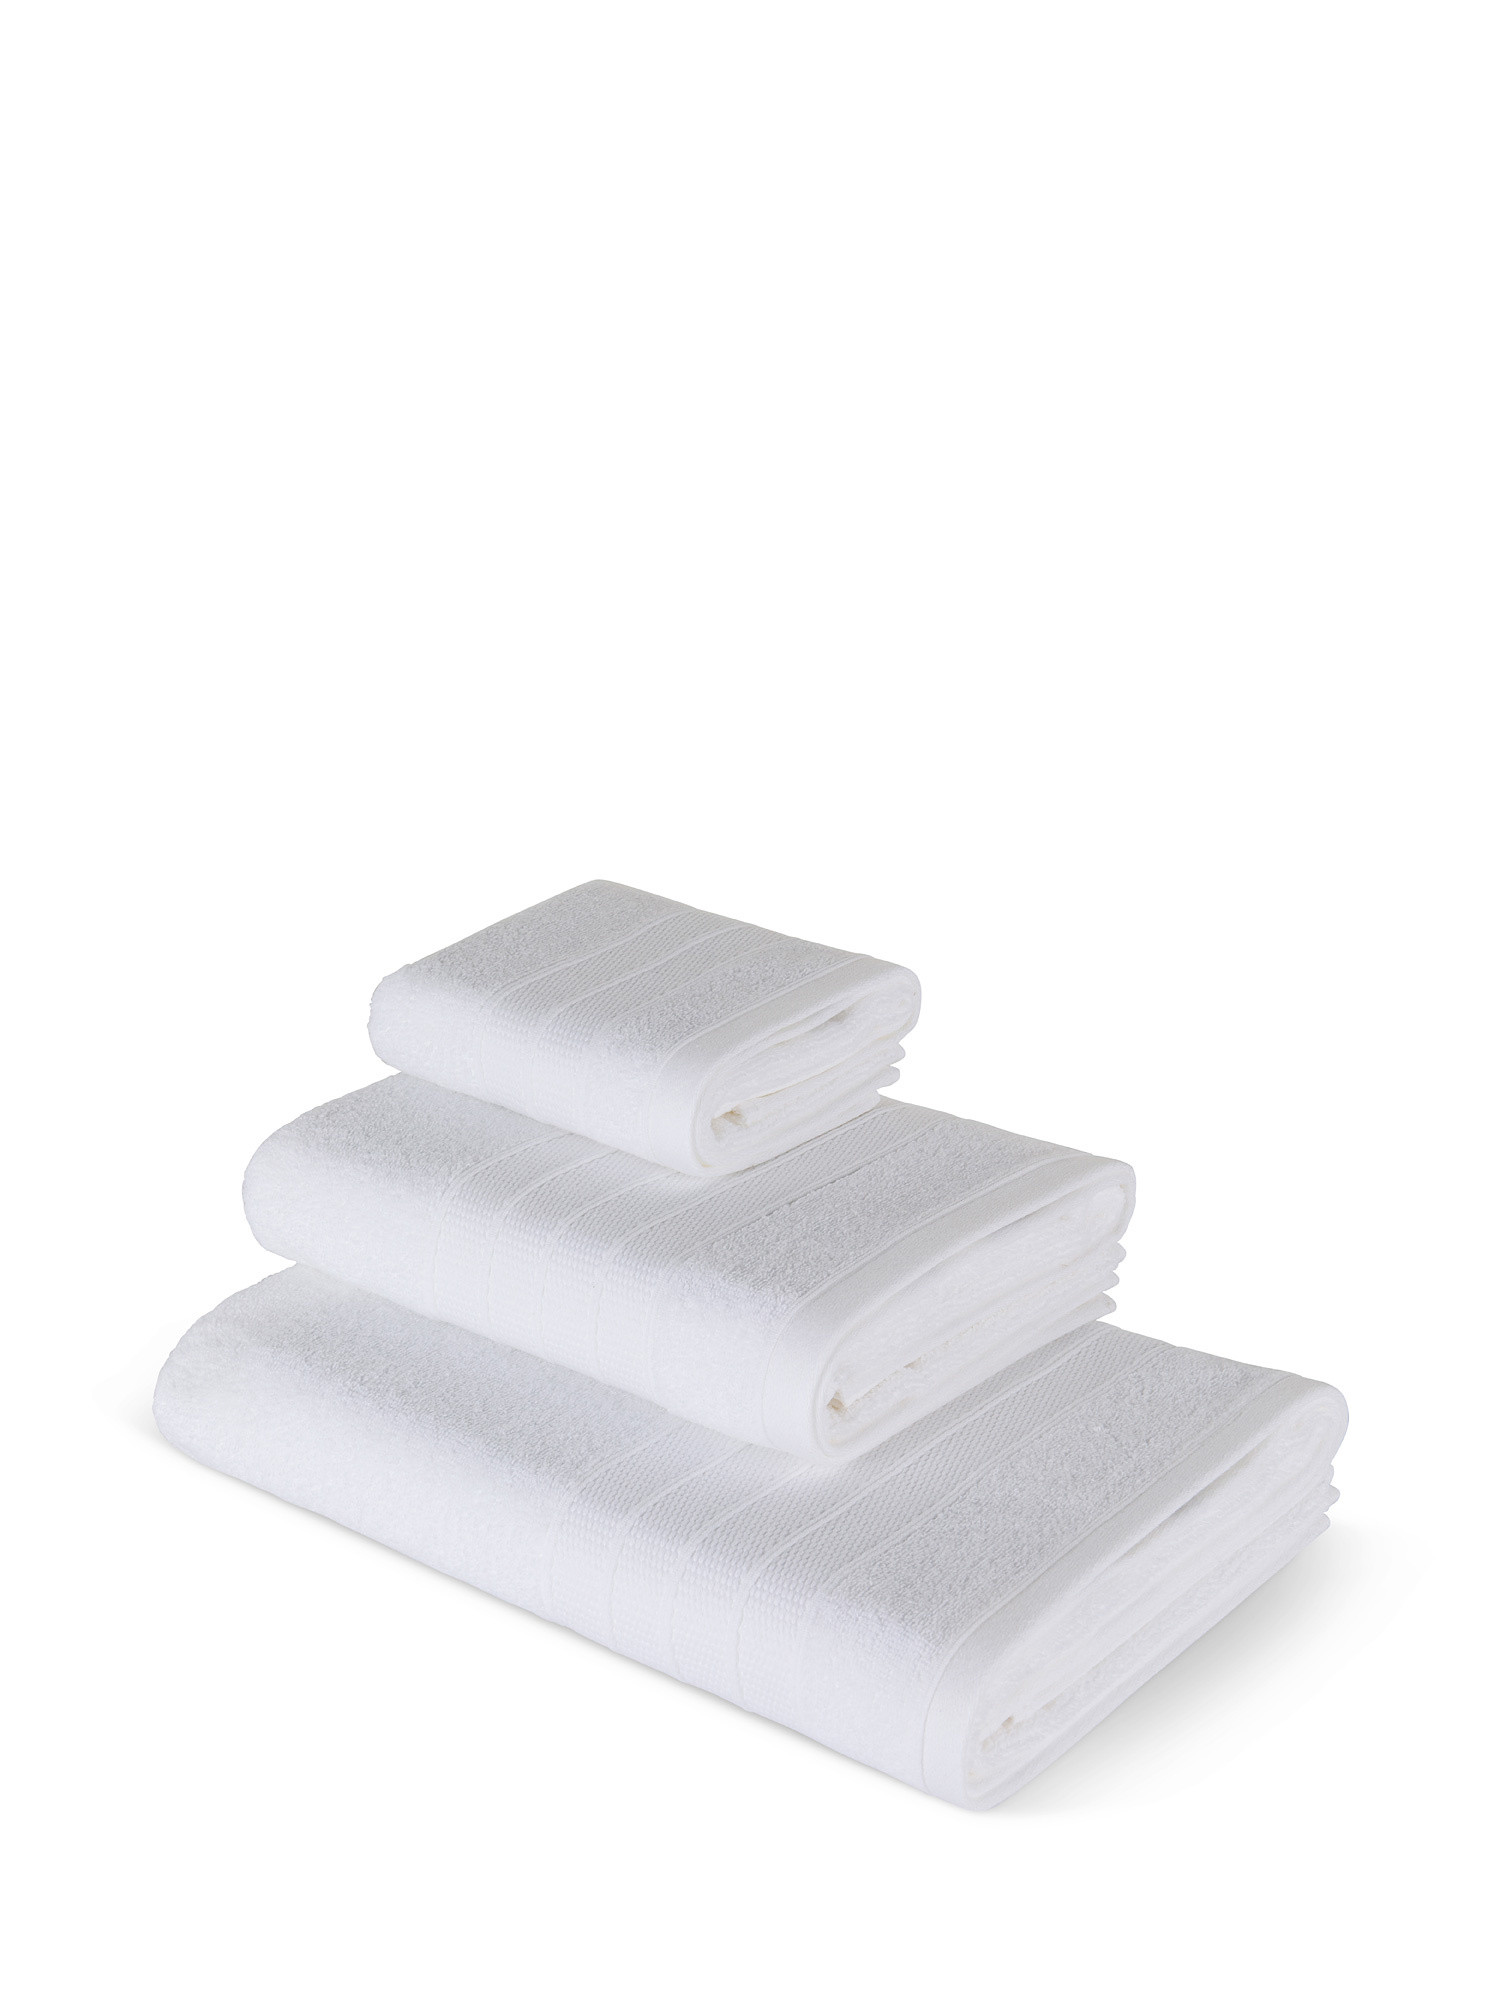 Asciugamano spugna di cotone tinta unita, Bianco, large image number 0